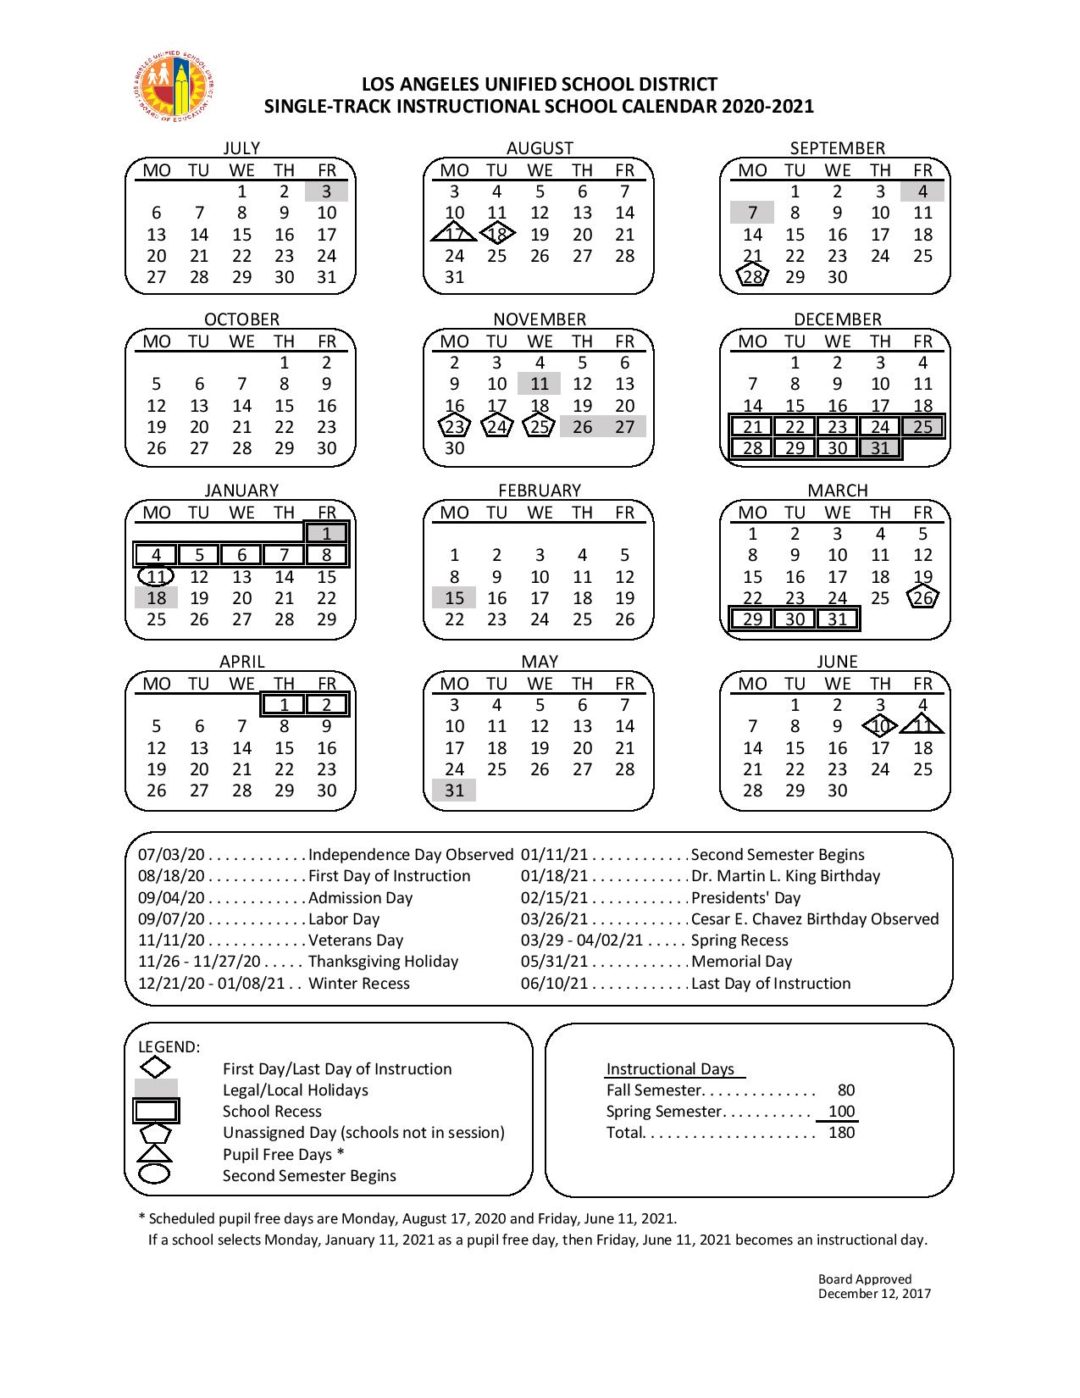 Los Angeles Unified School District Calendar 2020 2021